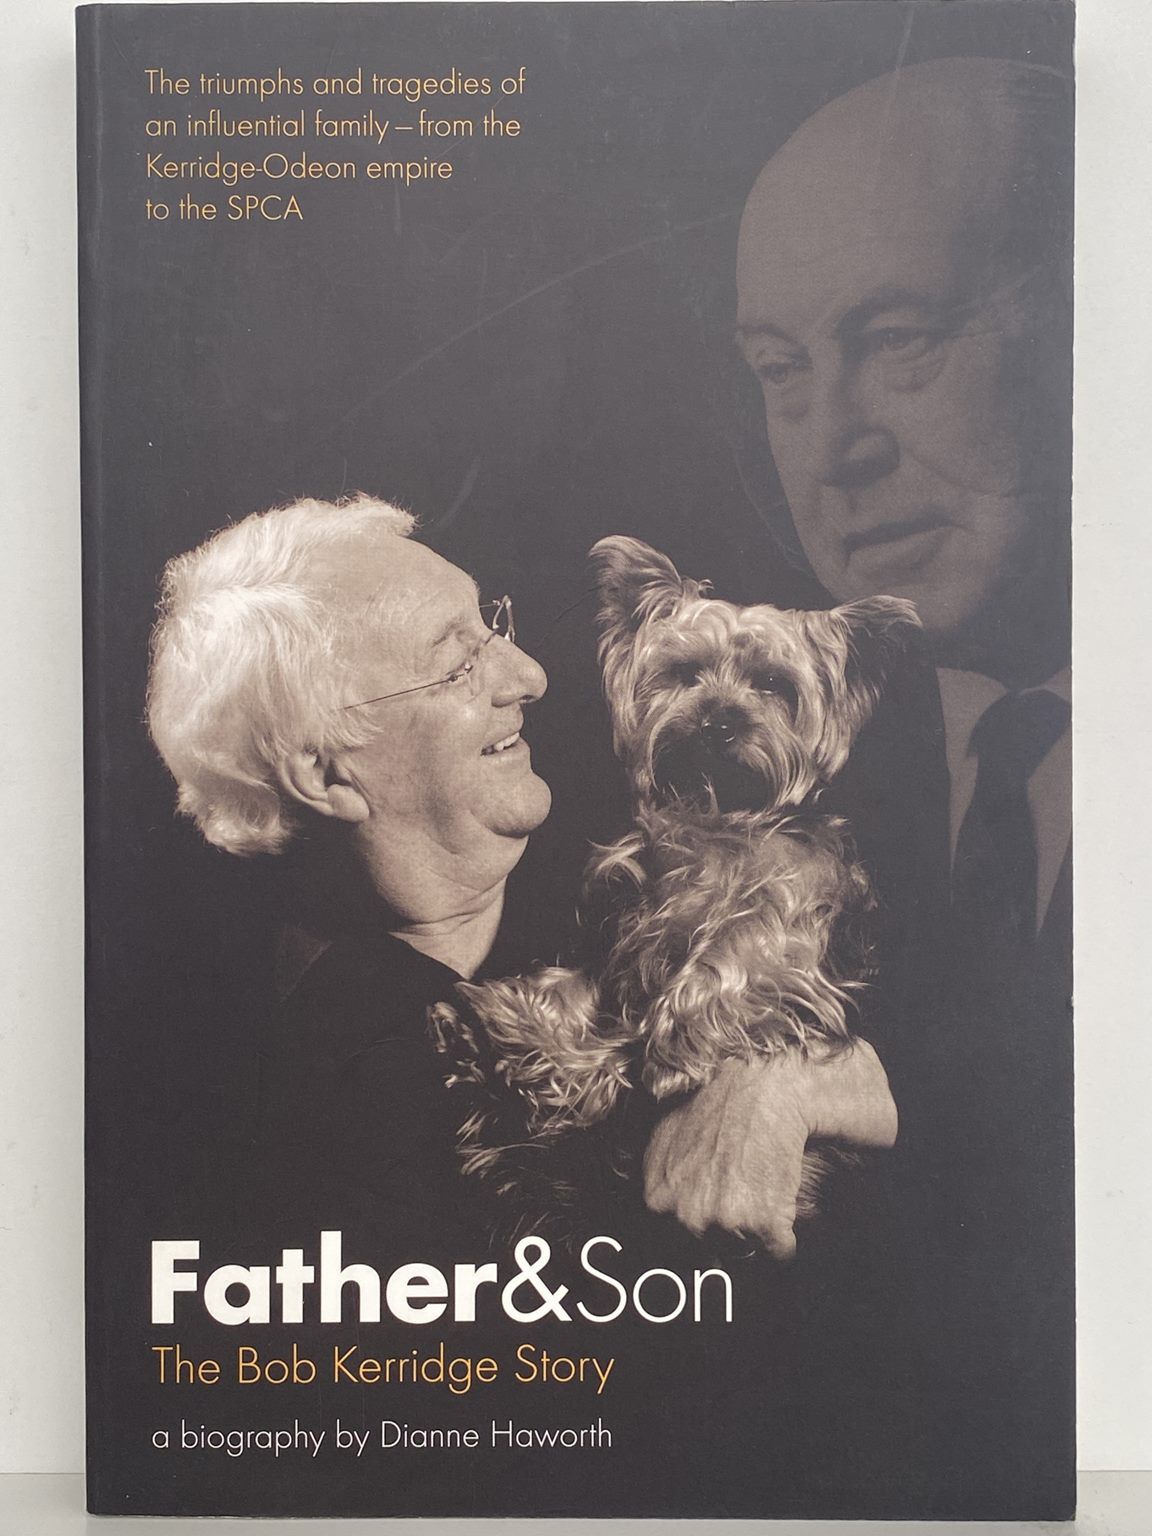 FATHER & SON: The Bob Kerridge Story